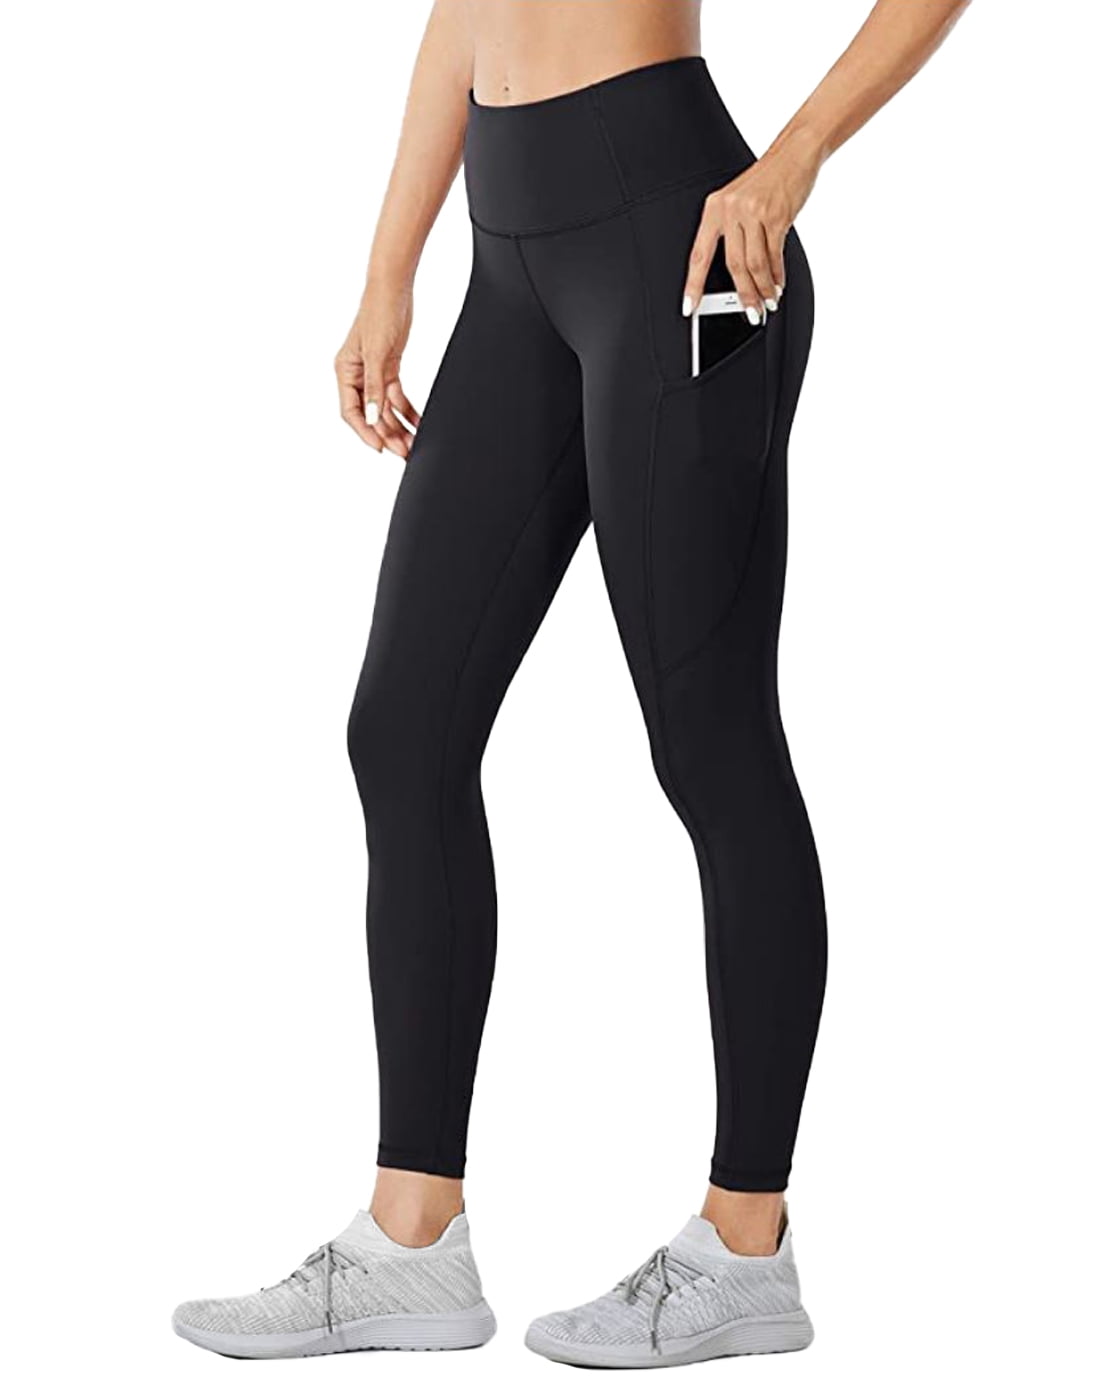 Sportika Performanse High Waist Legging - Pocket Yoga Pants - Walmart.com